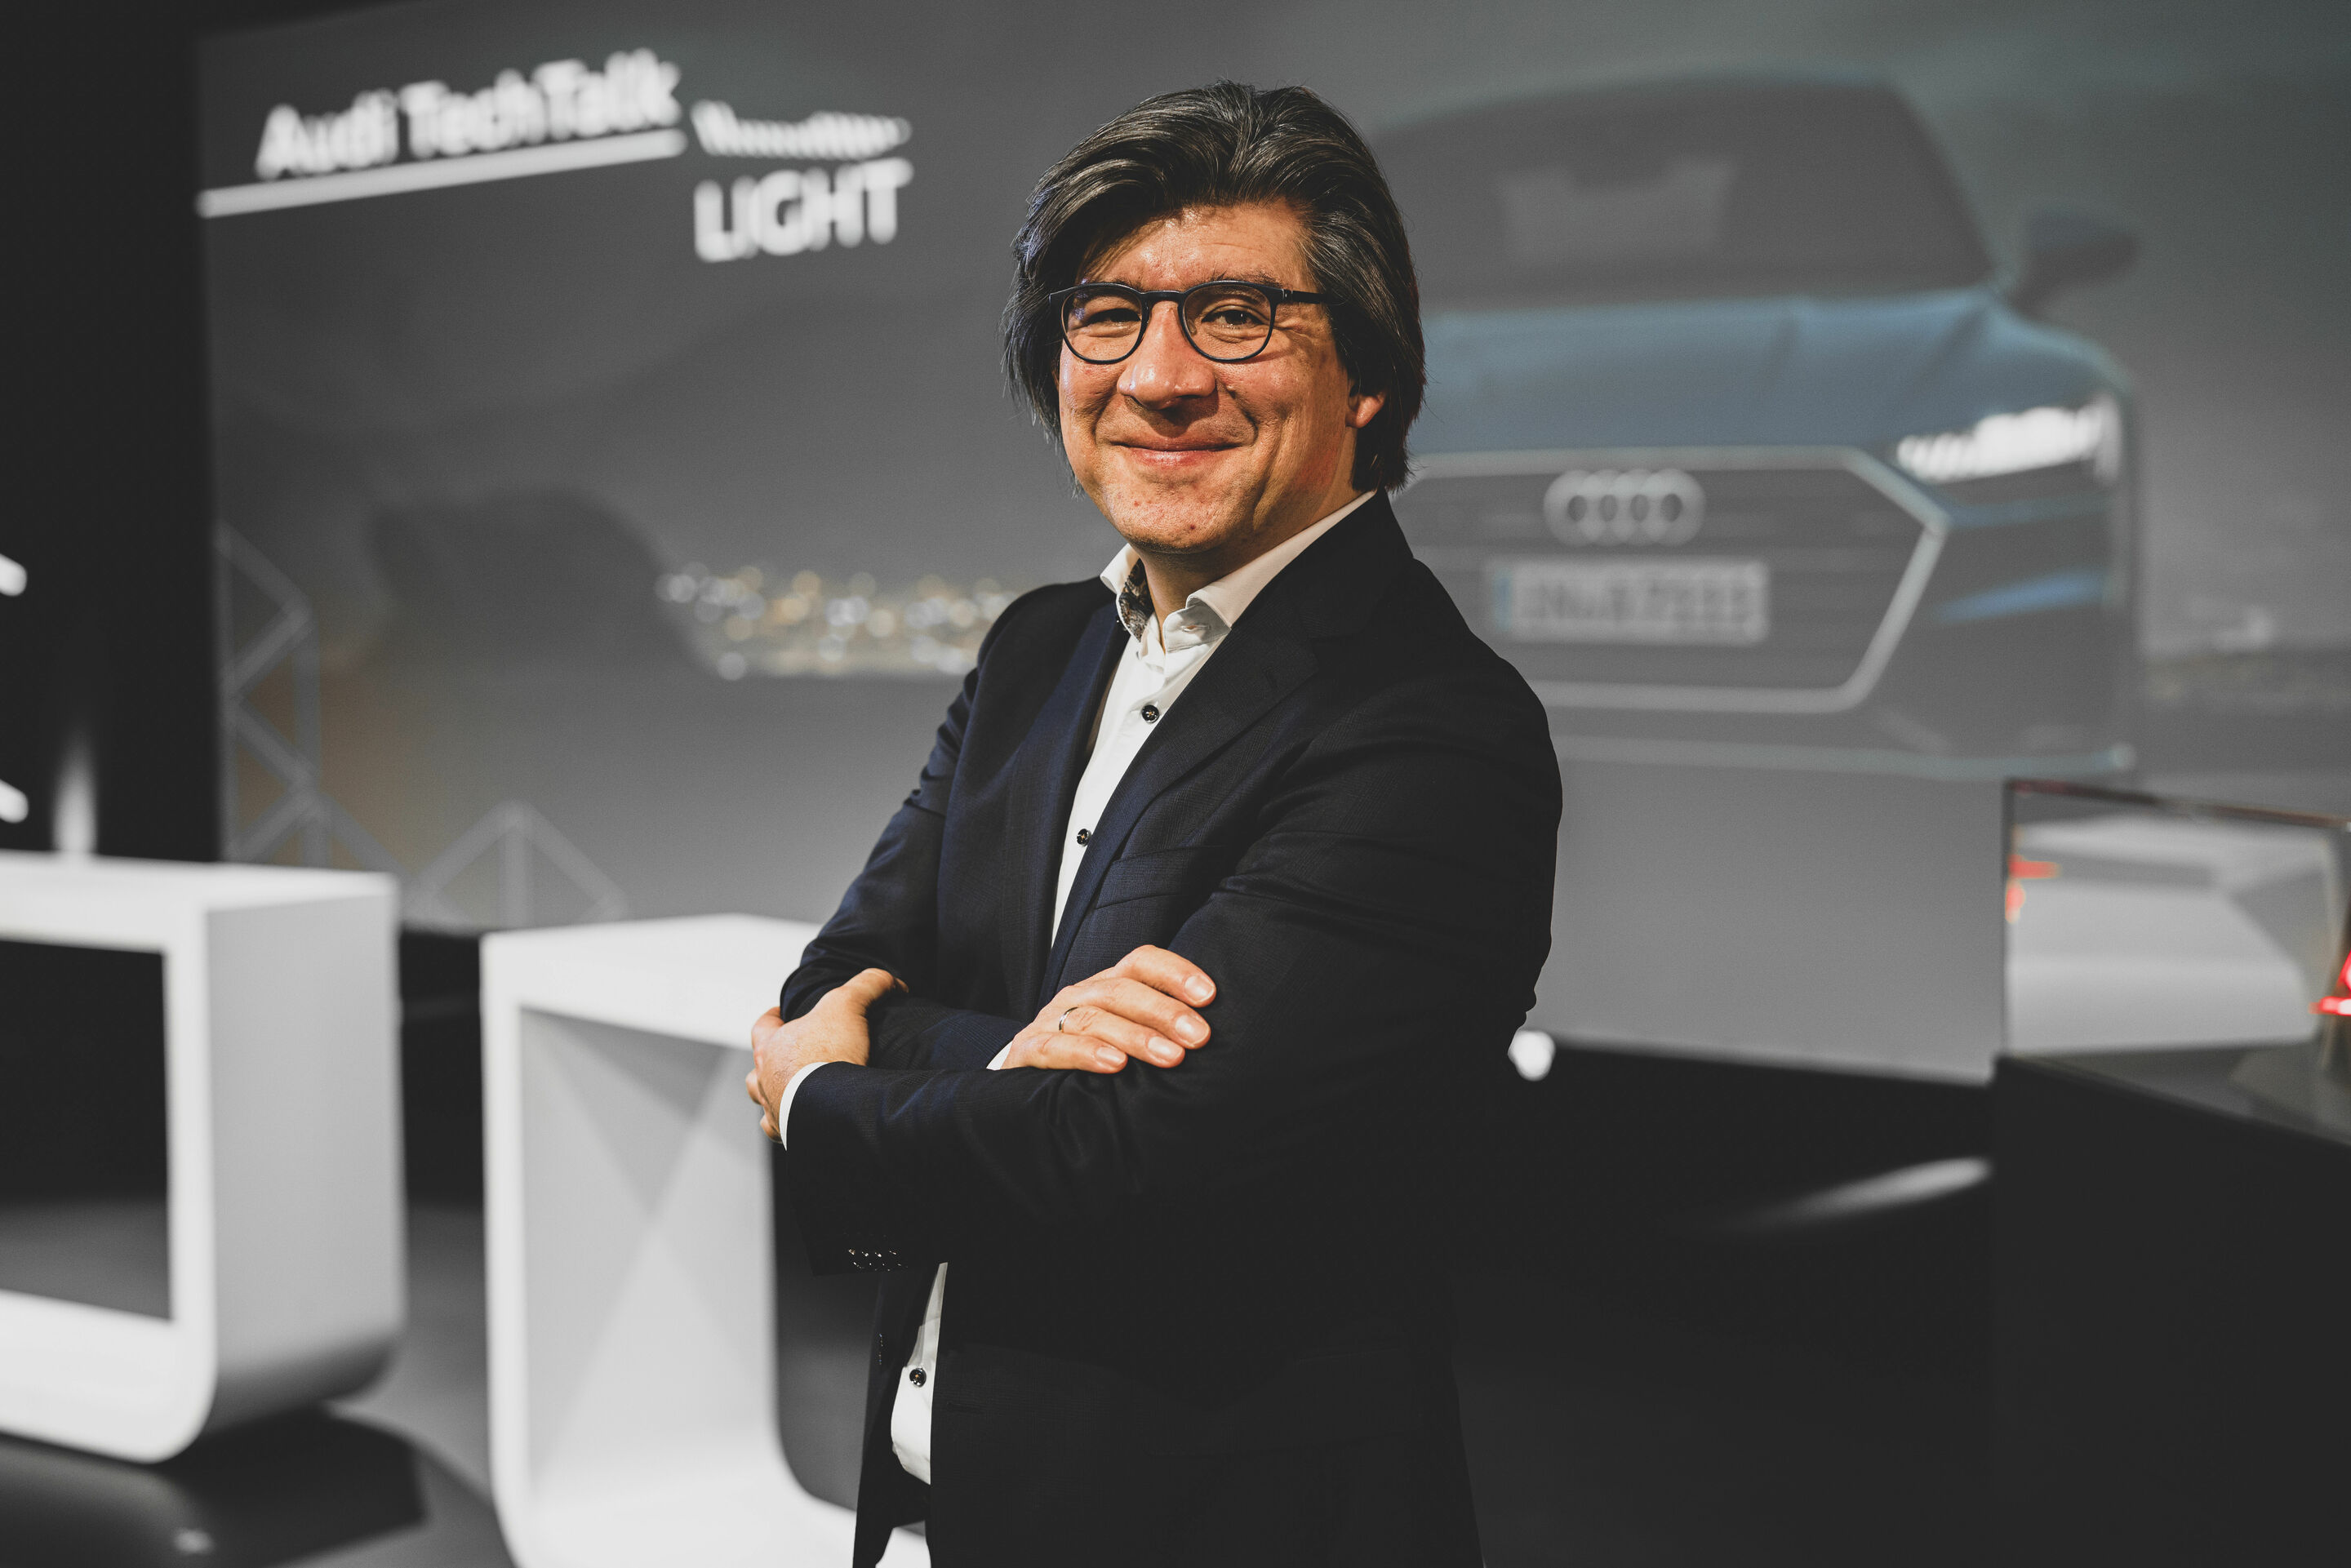 Audi TechTalk: Light